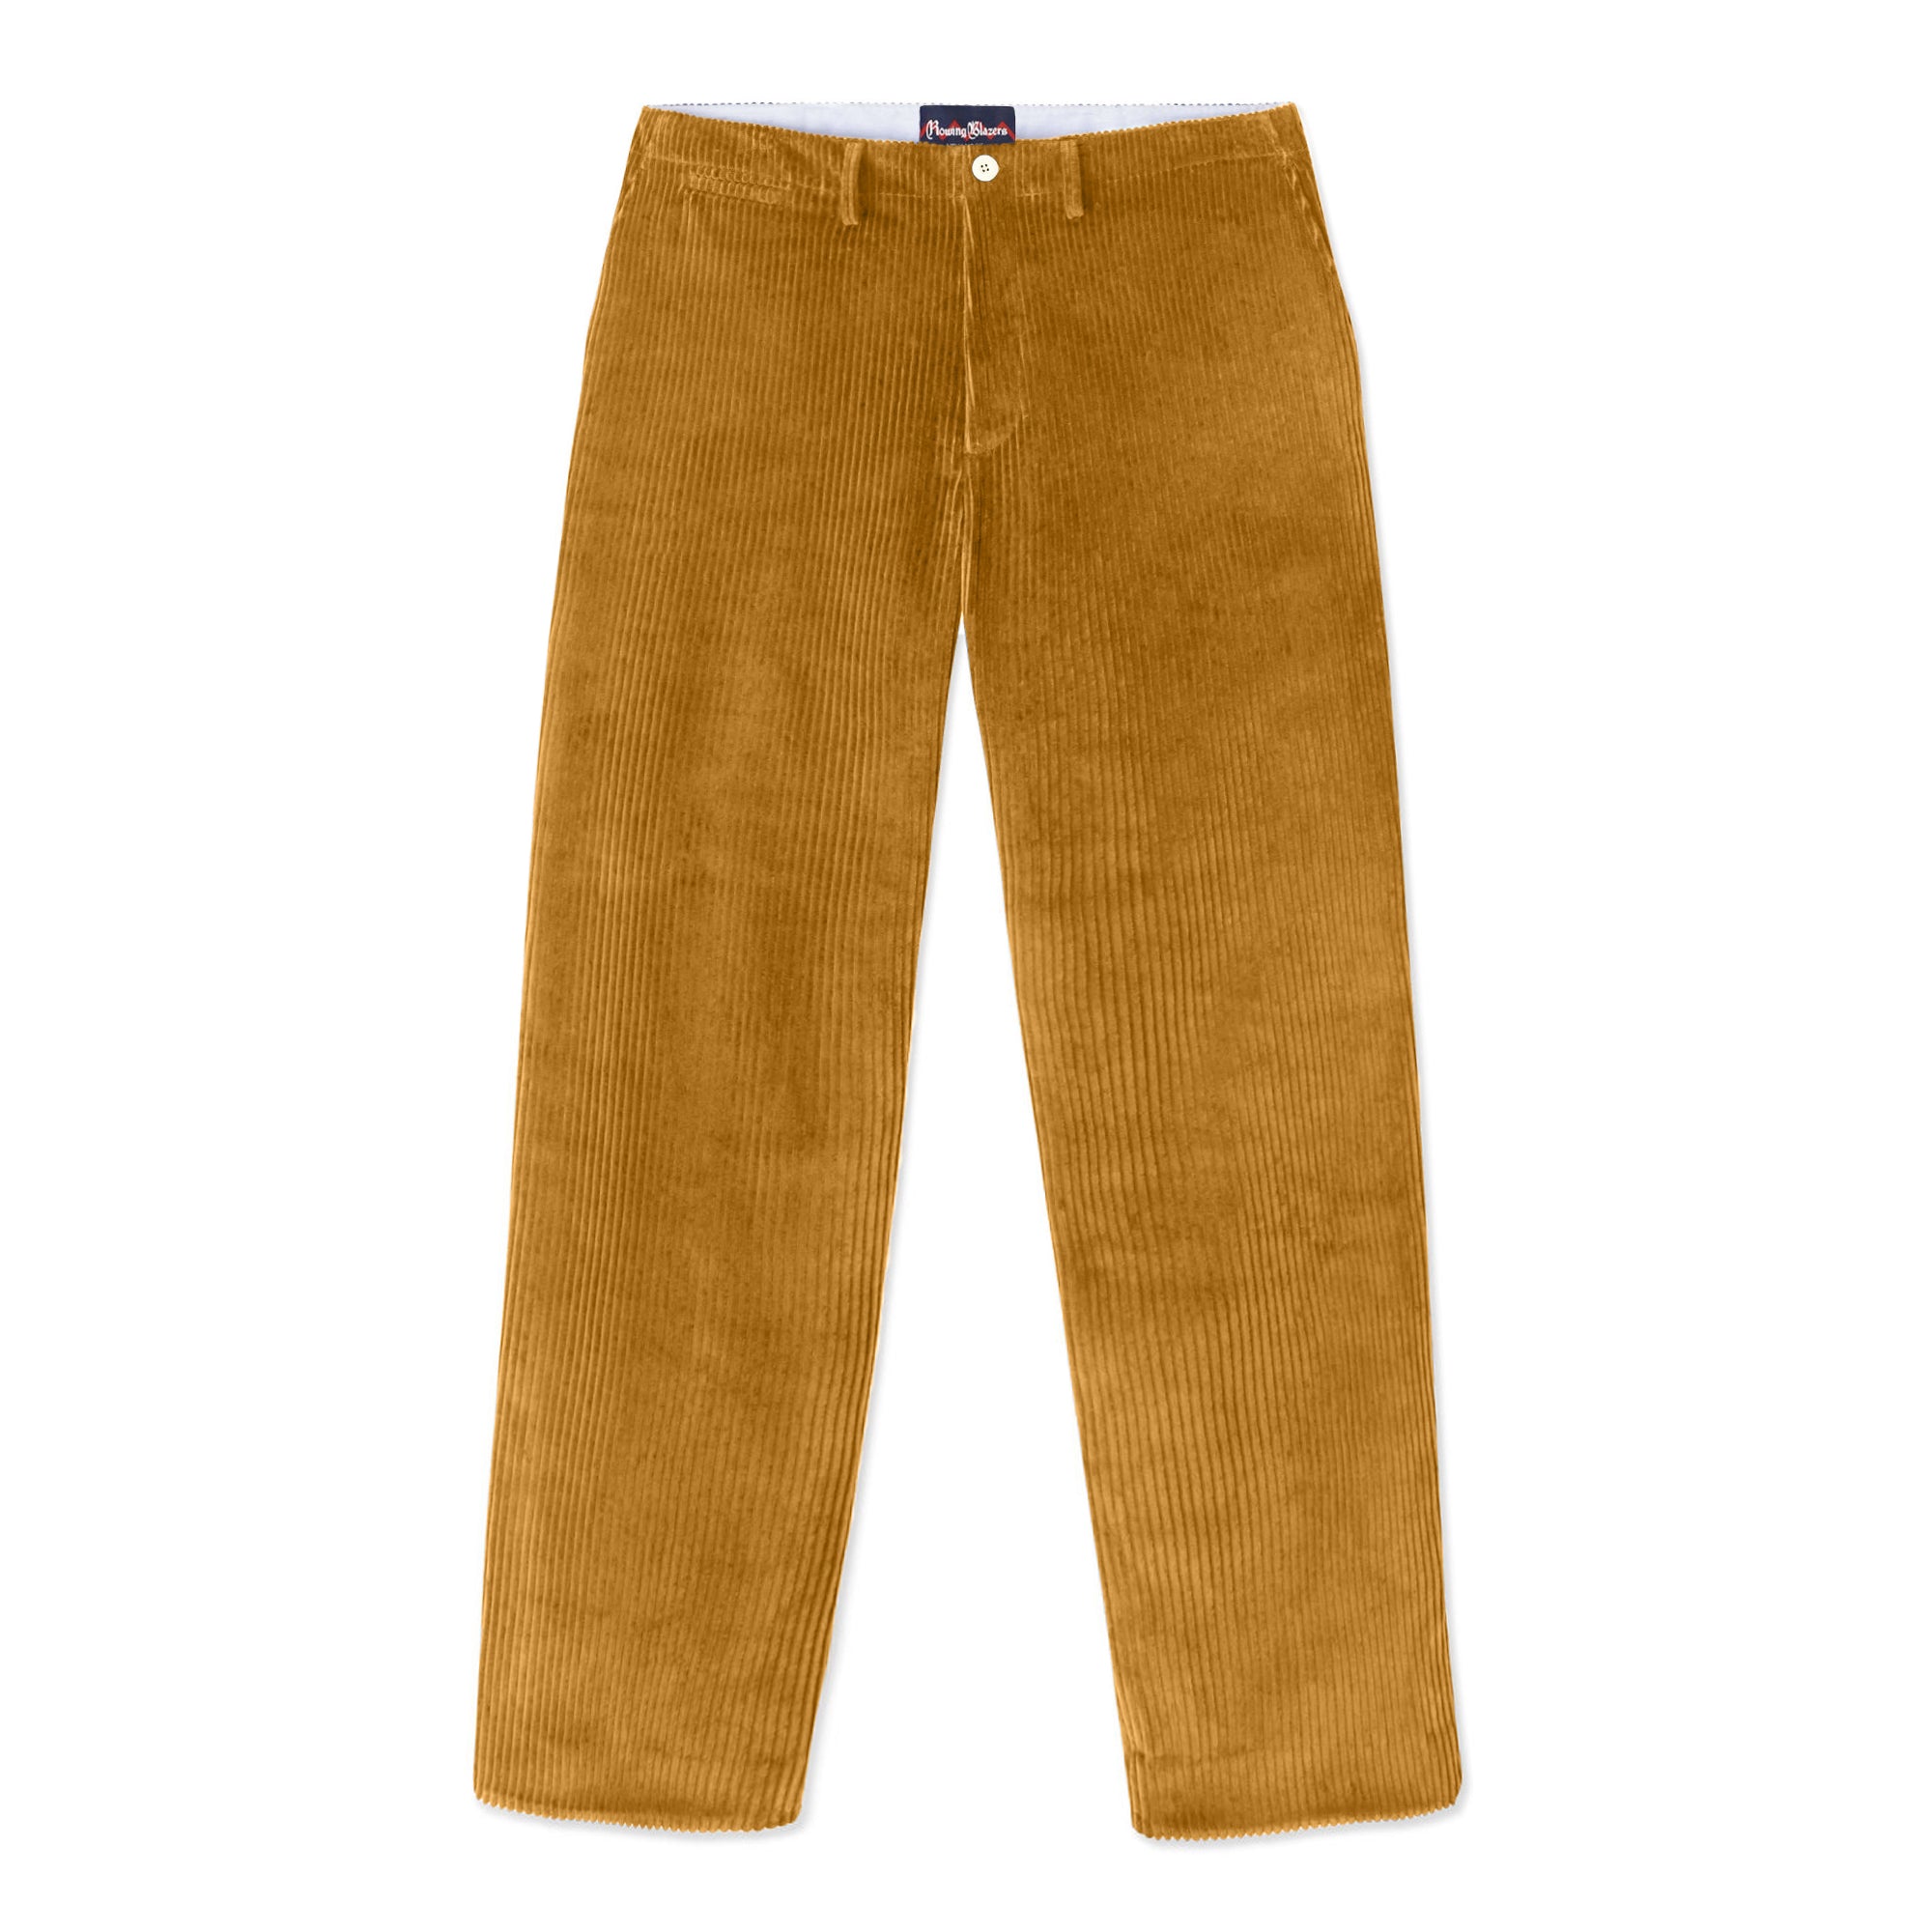 Men's Vintage Corduroy Gurkha Trousers High Waist Straight Pleated Naples  Pants | eBay